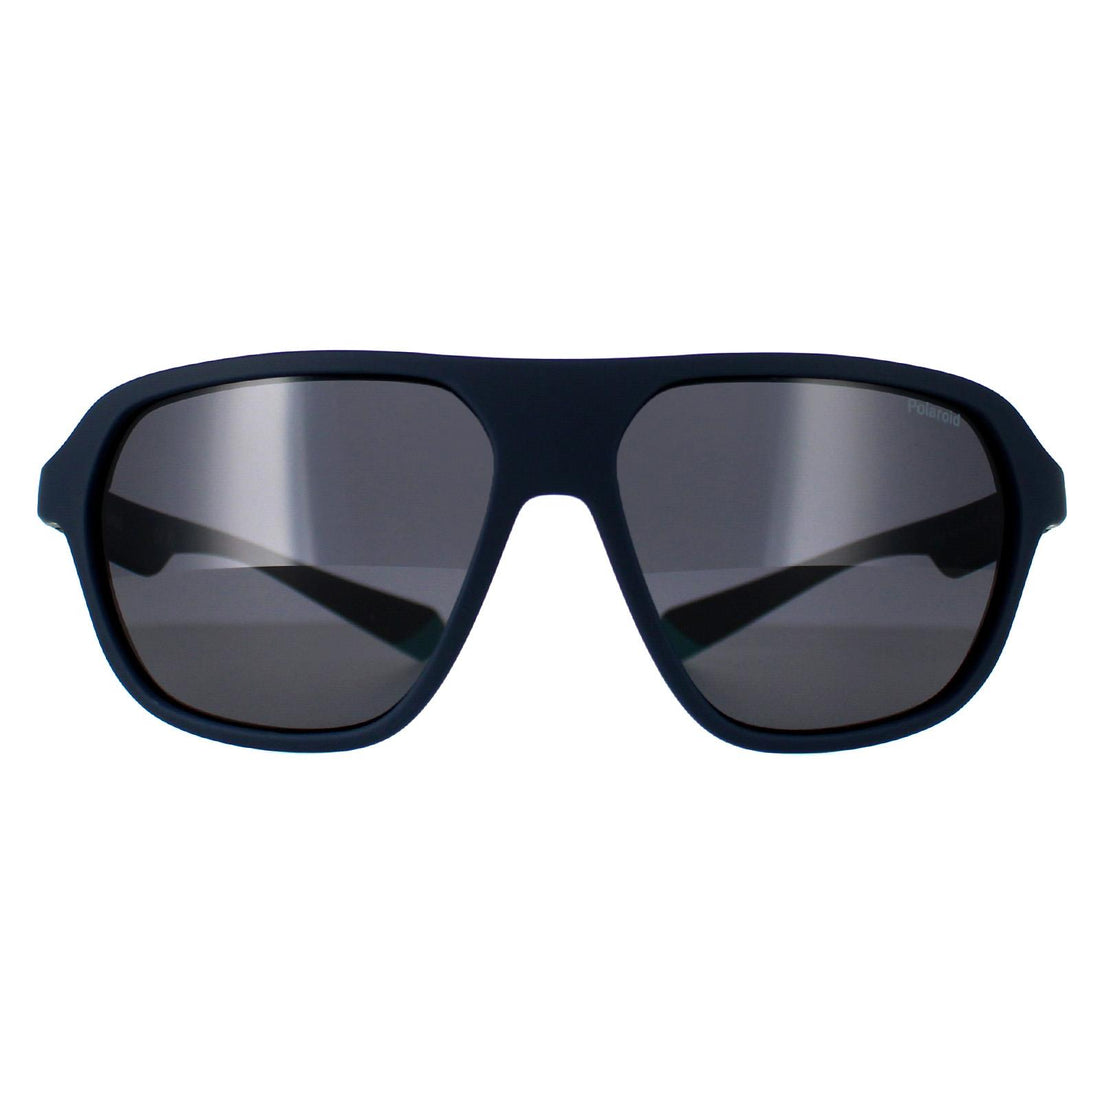 Polaroid Sunglasses PLD 2152/S FLL C3 Matte Blue Blue Polarized